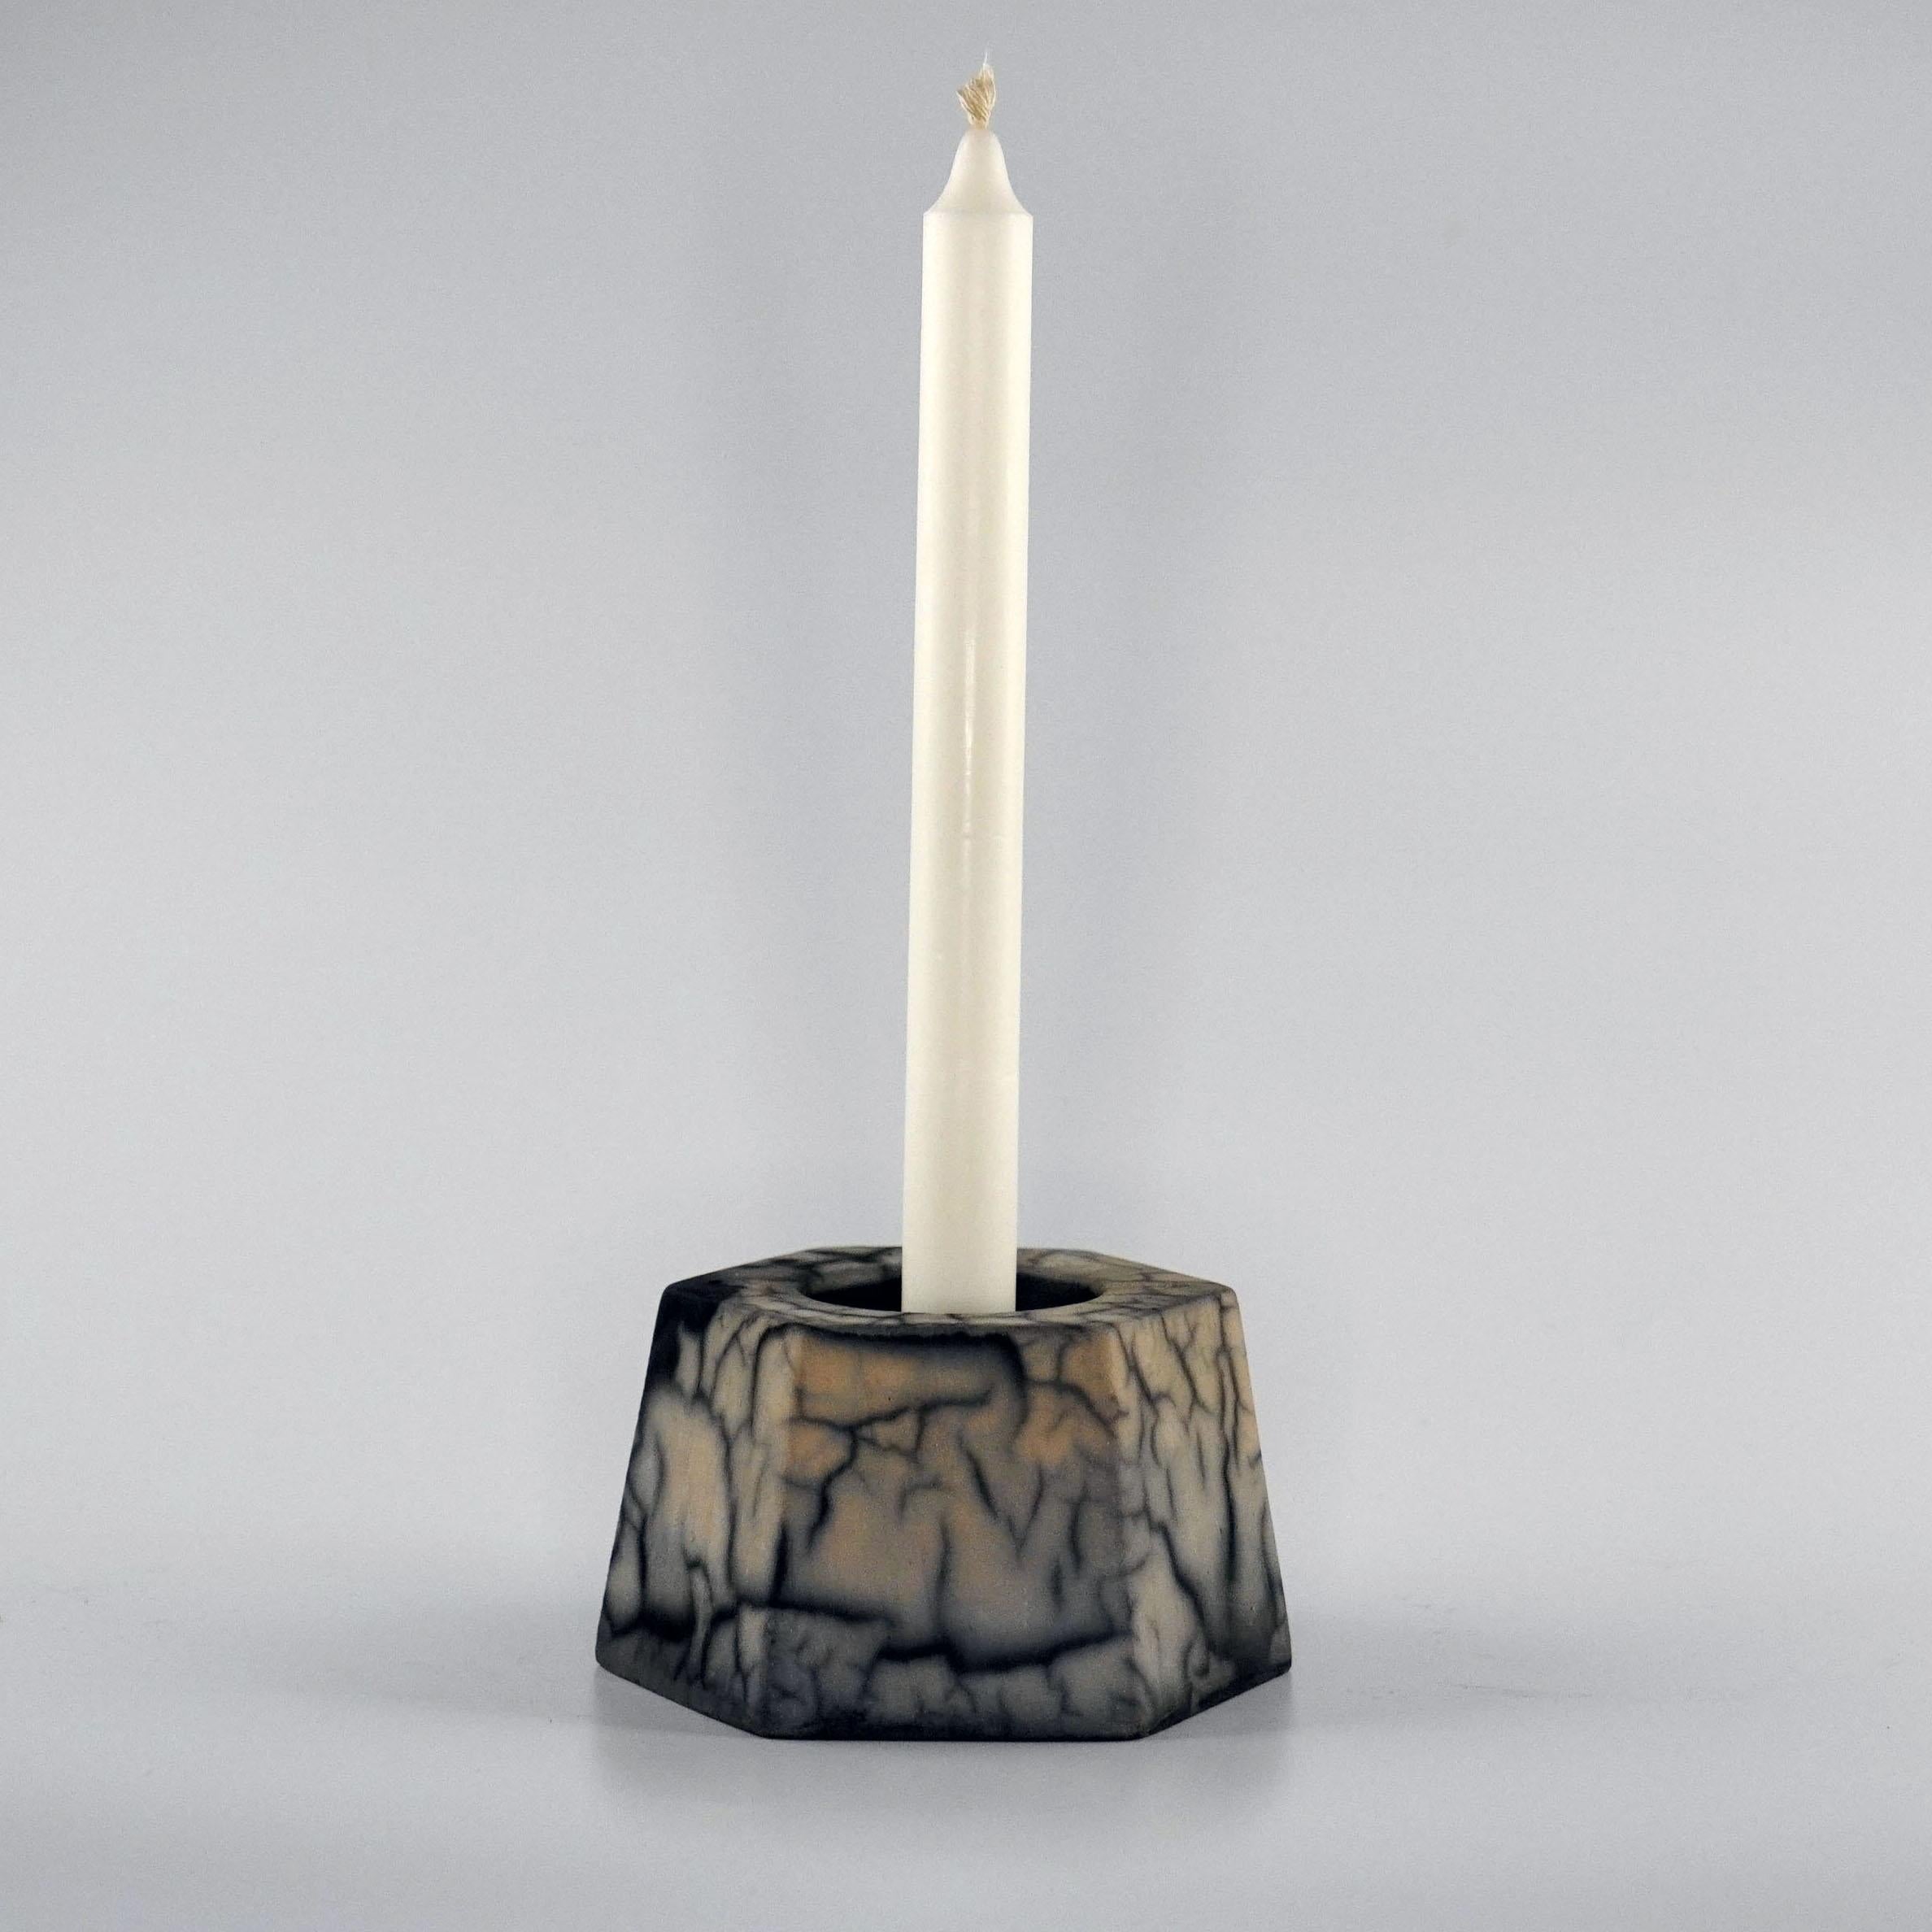 Fired Keihatsu Raku Tealight Candle Holder - Smoked Raku - Handmade Ceramic Pottery For Sale